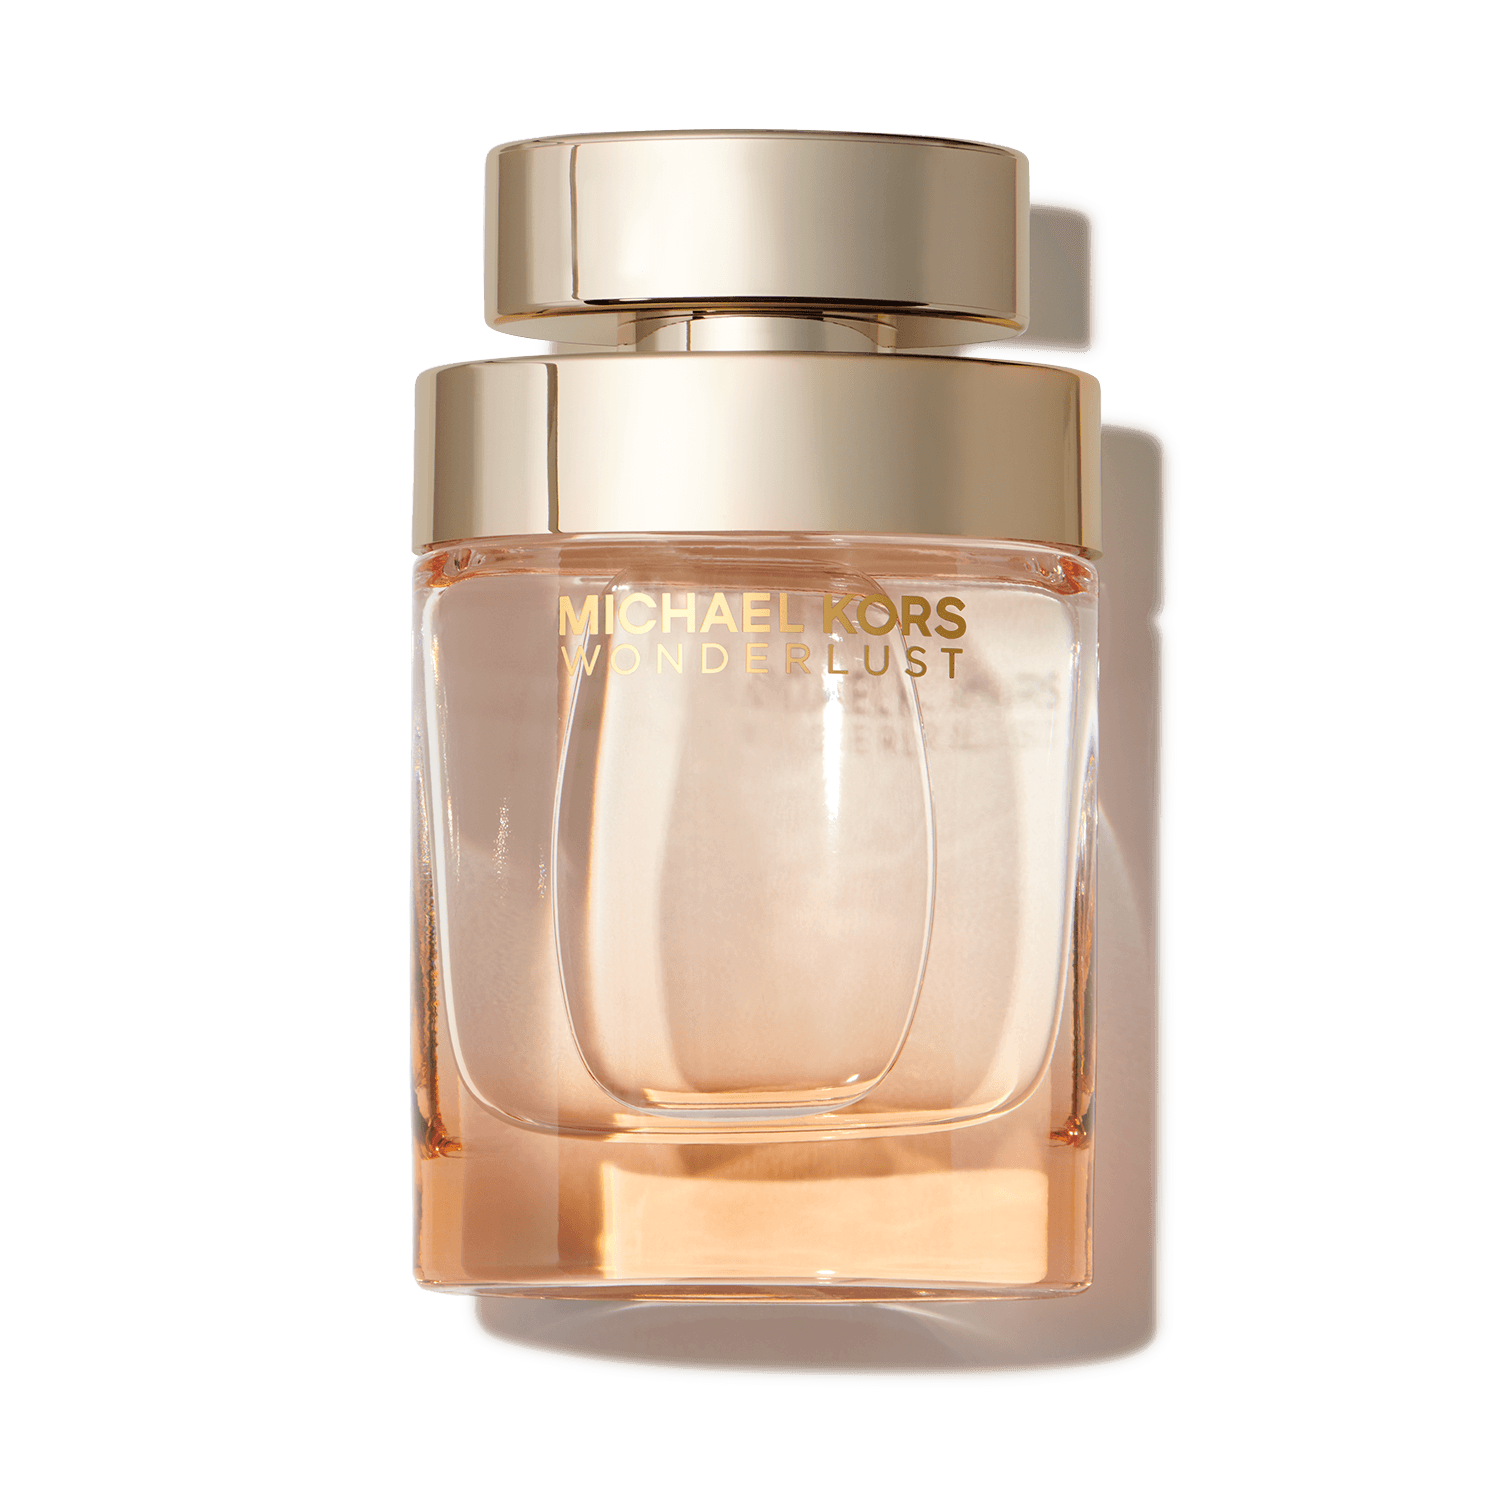 Introducing Twilight Shimmer the New Michael Kors Perfume  Savoir Flair